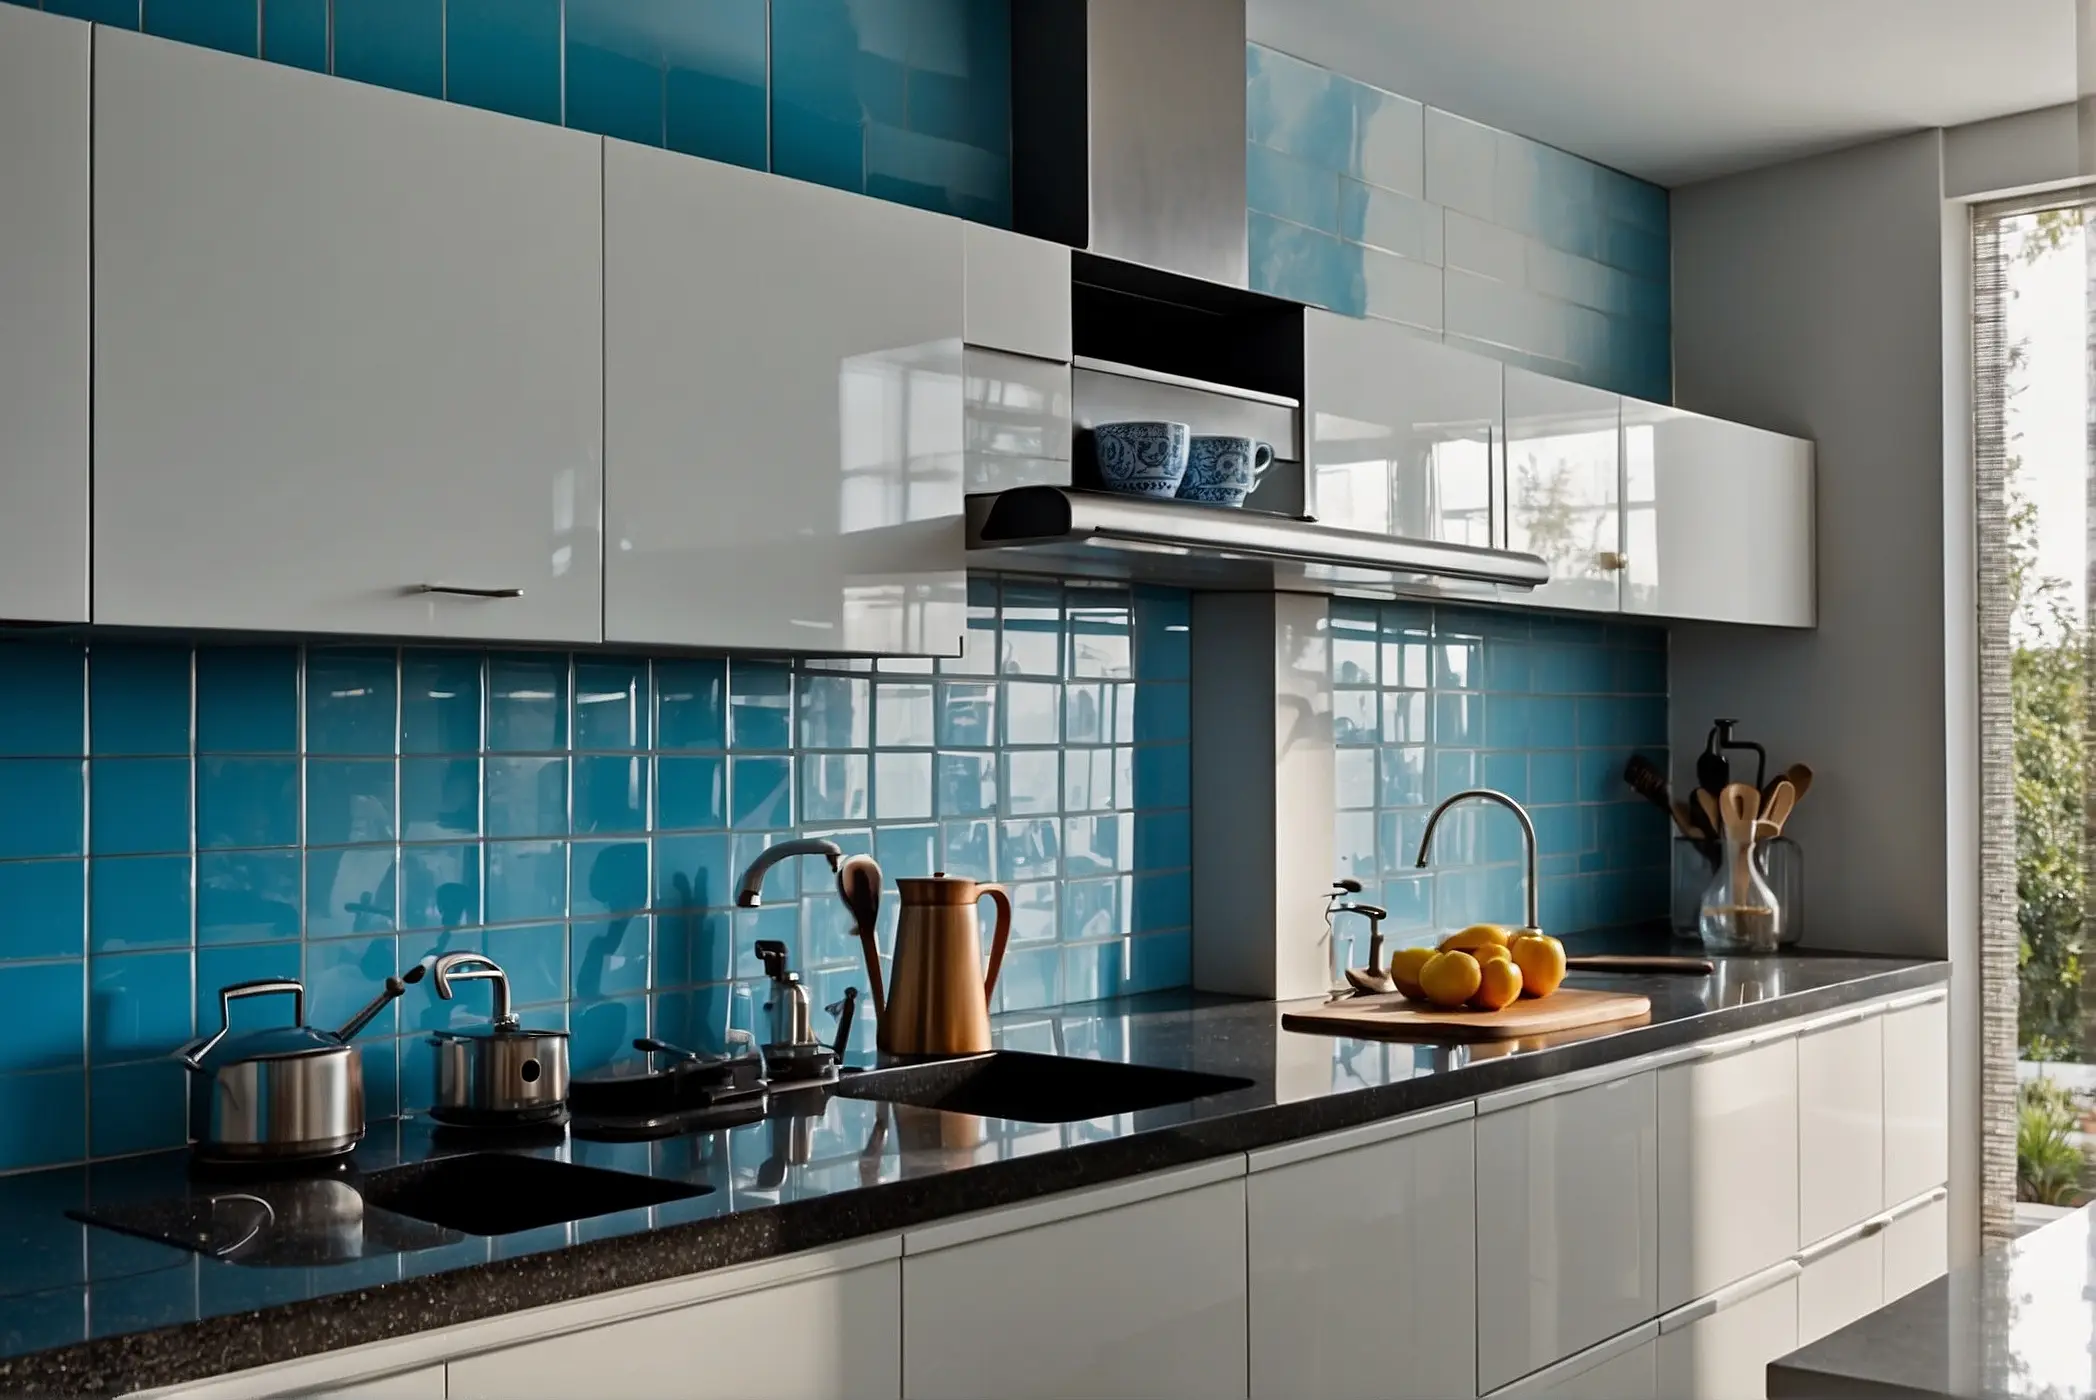 Backsplash ideas for Blue and White Kitchen Cabinets 5